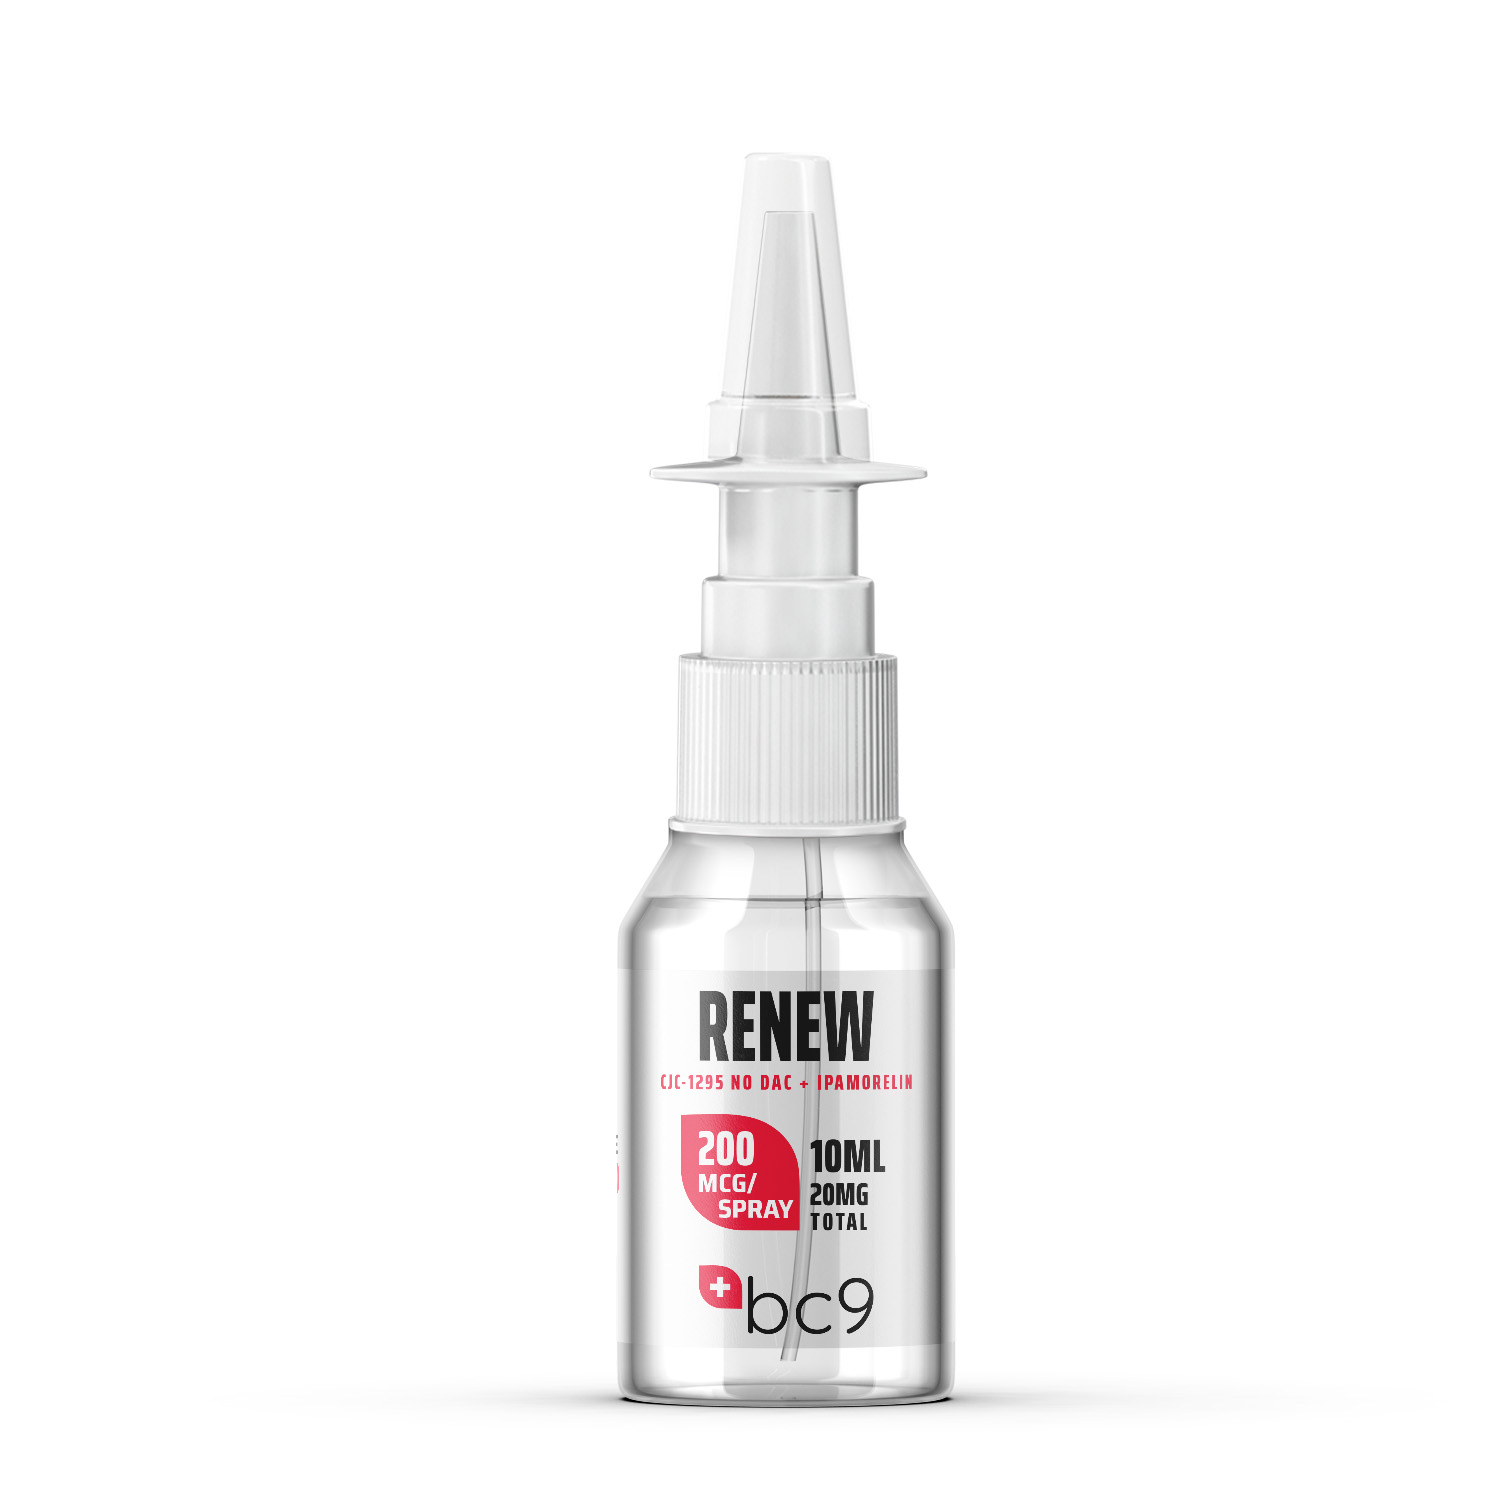 Renew Spray (CJC-1295 No DAC + Ipamorelin) | BC9.org